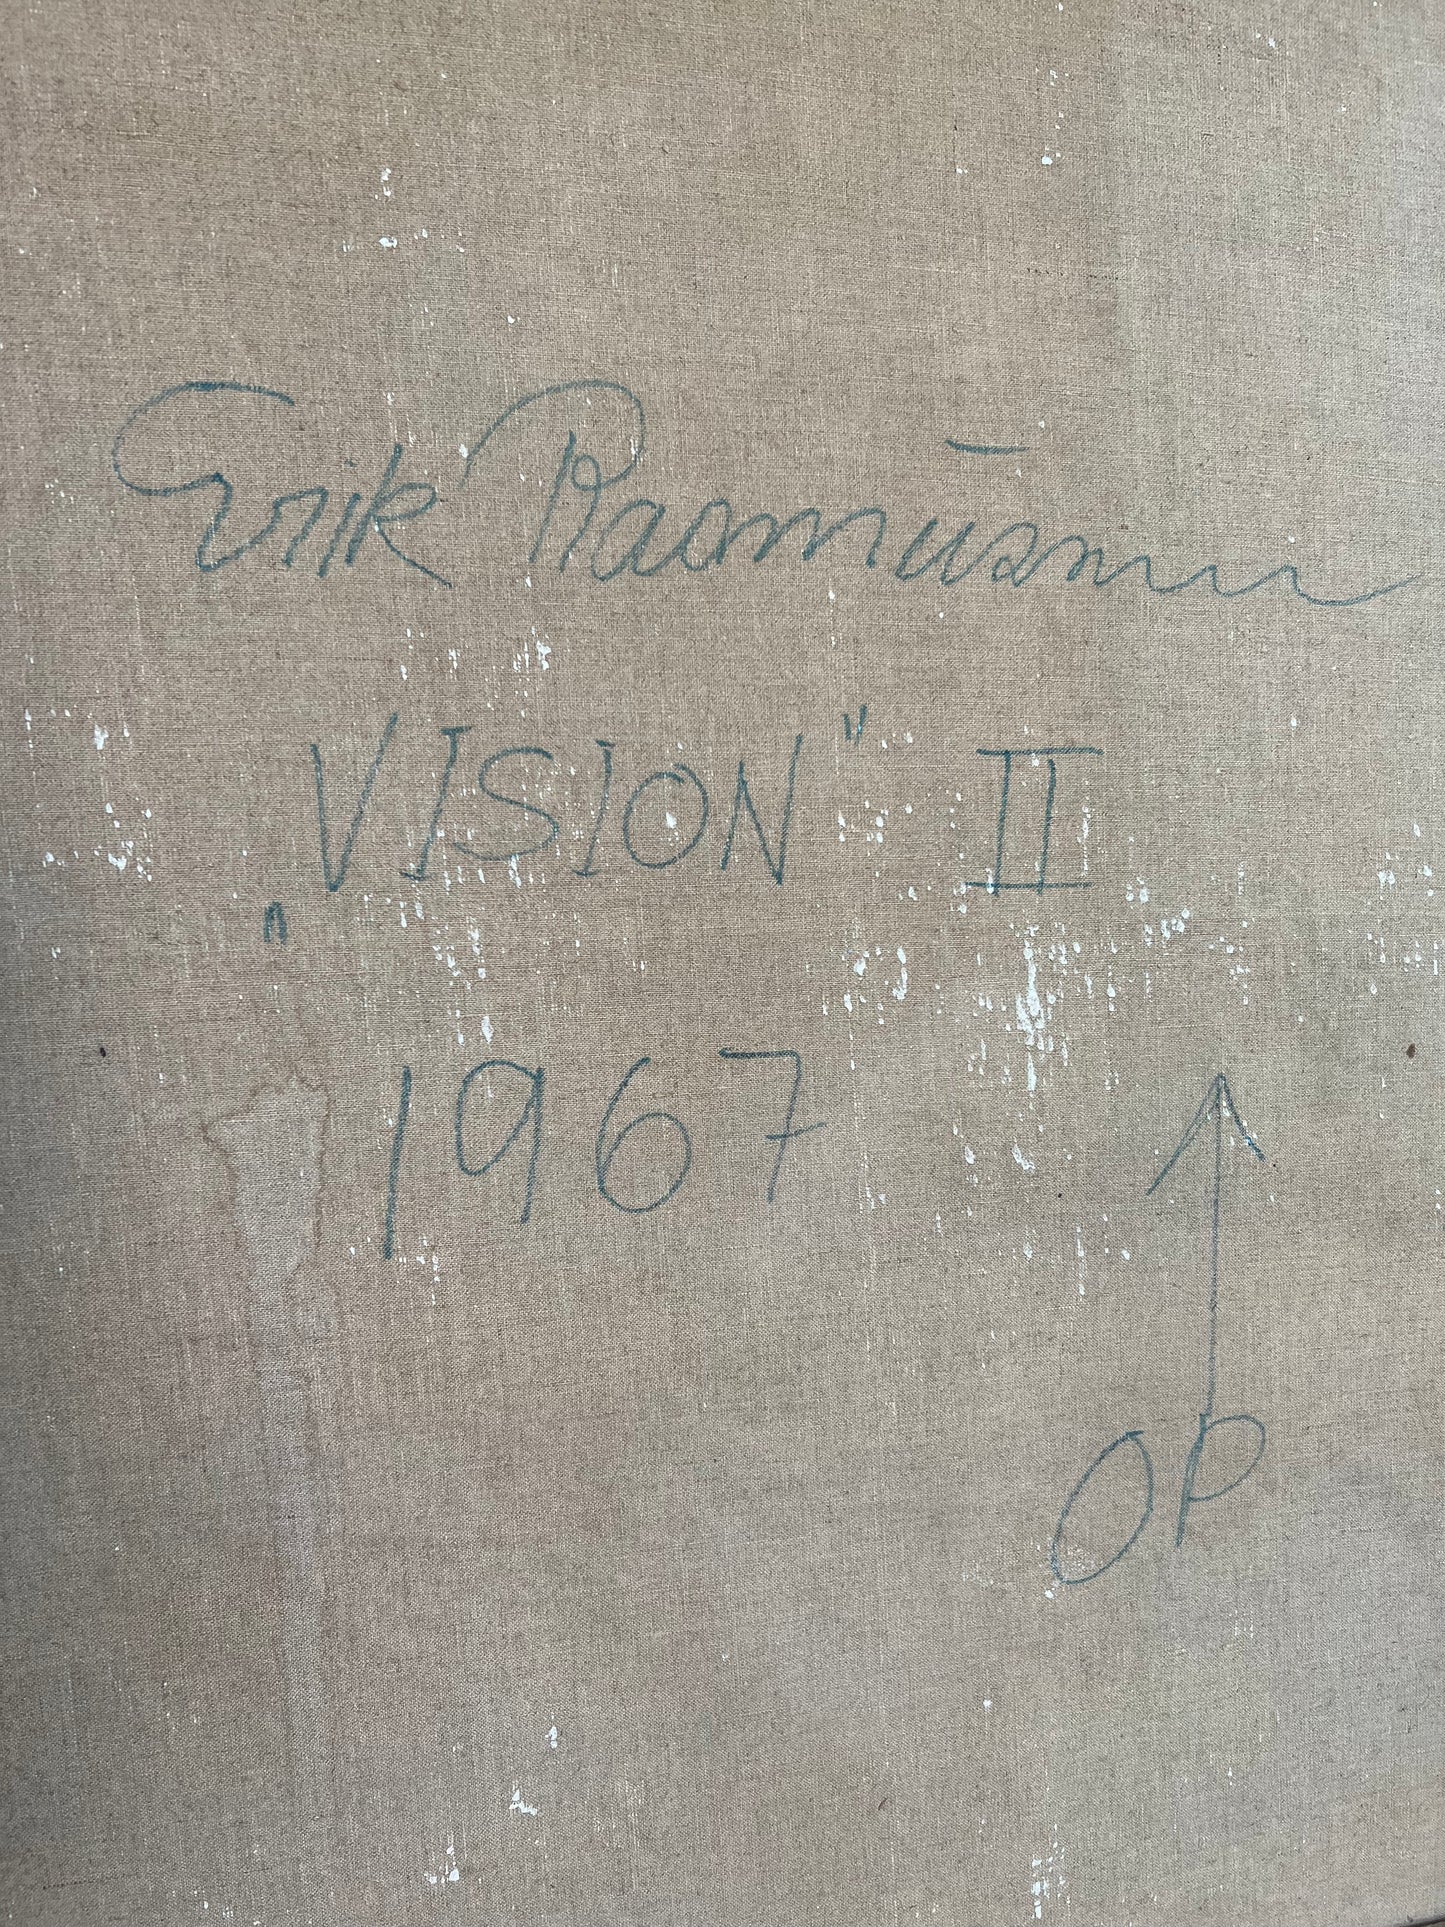 Erik Rasmussen. “Vision II”, 1967